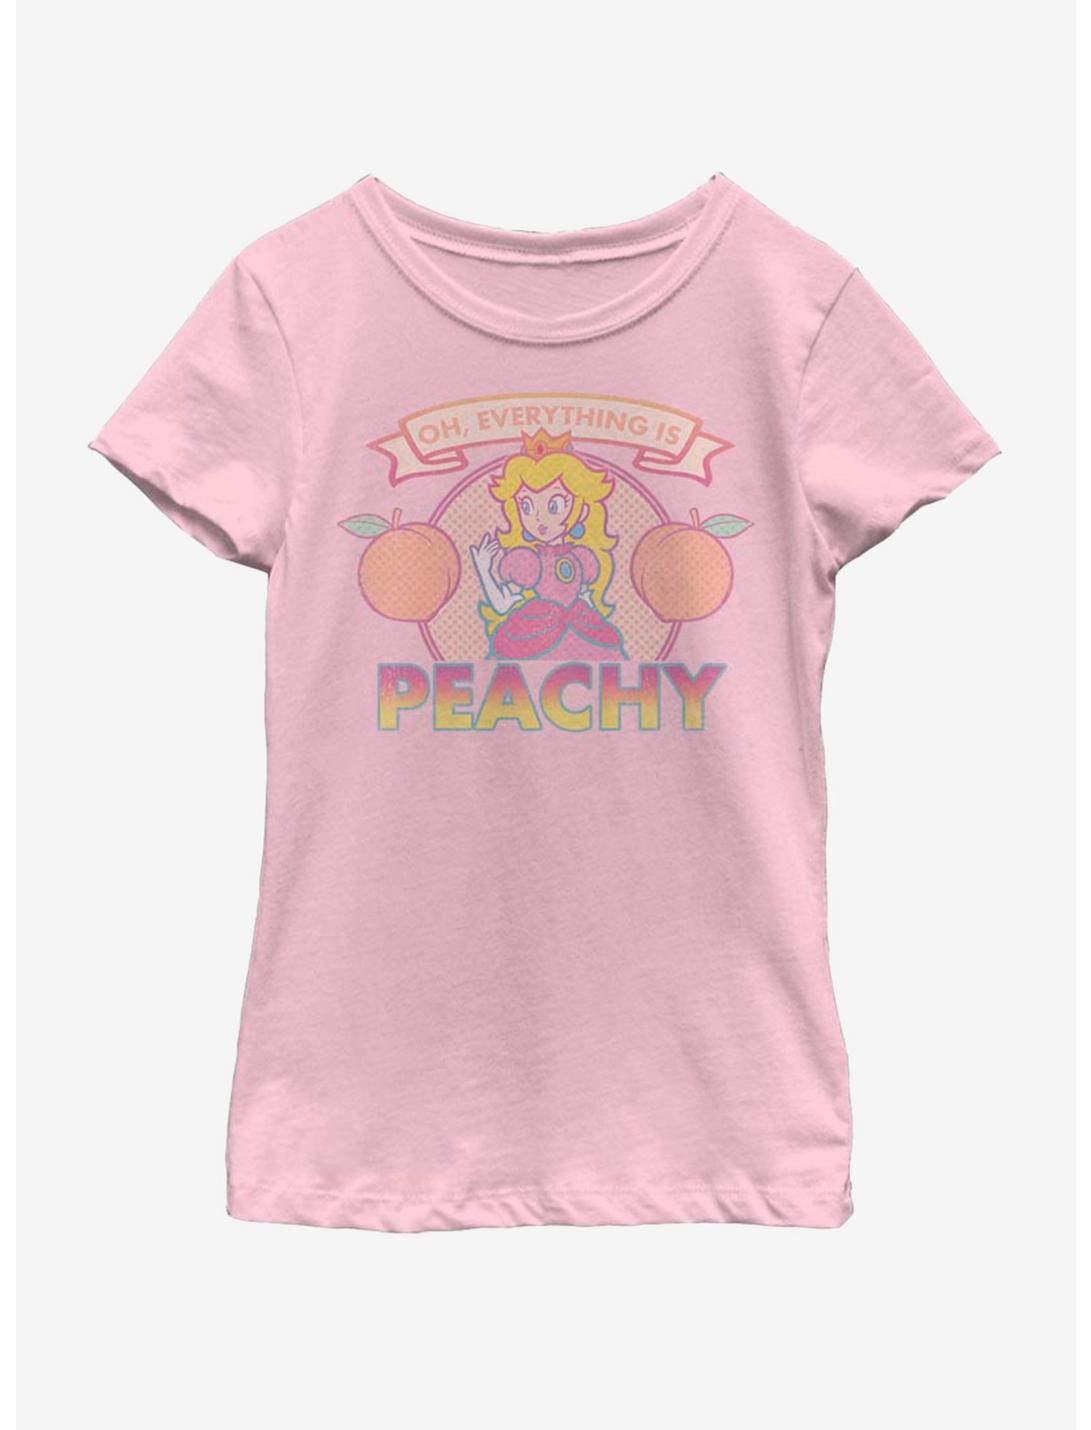 Nintendo Peach Oh Youth Girls T-Shirt, PINK, hi-res